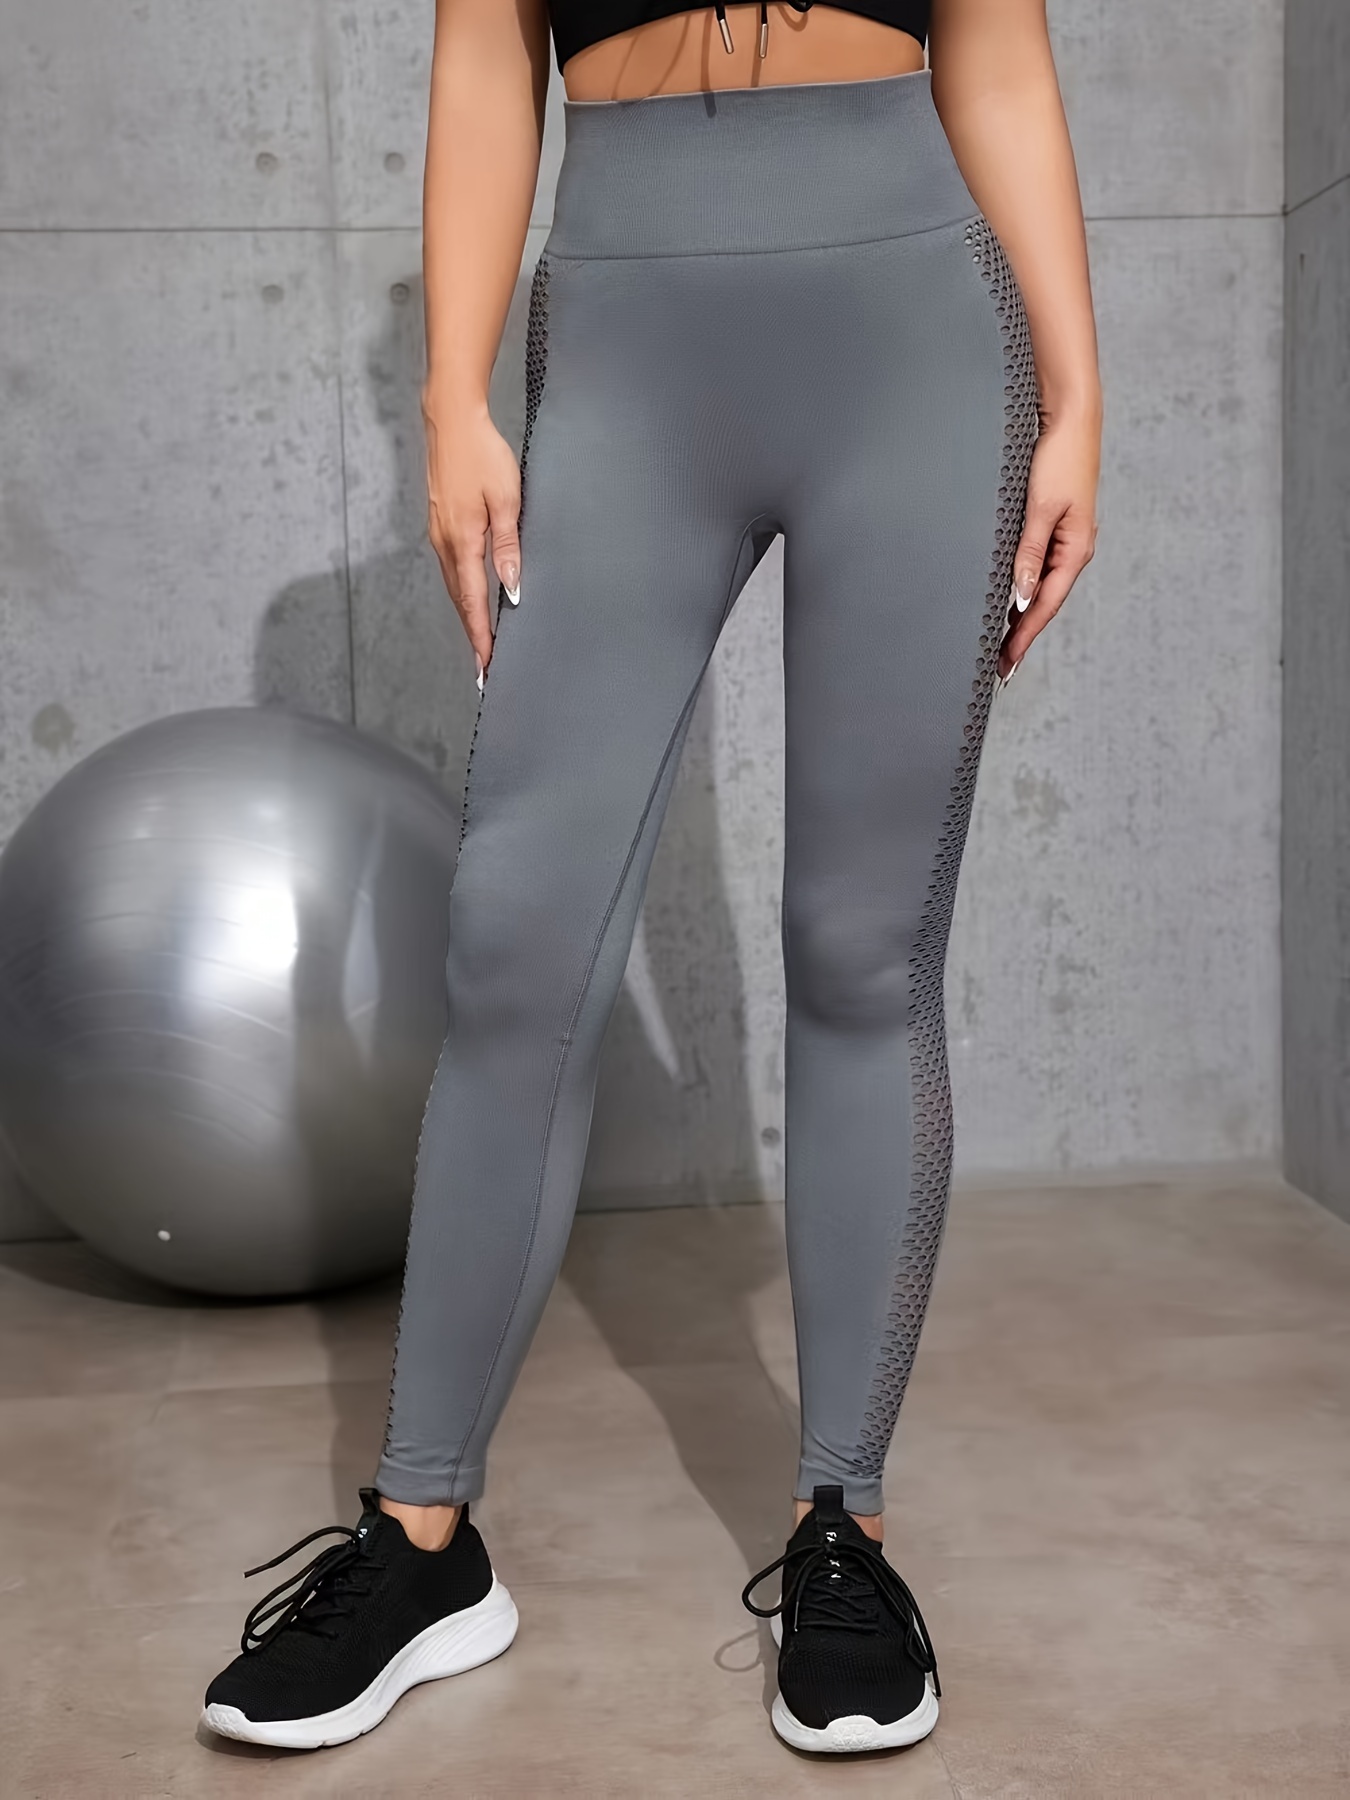 Women Mesh Houndstooth Printed Leggings Sexy Semi Sheer Fitness Skinny Pants  : r/gym_apparel_for_women